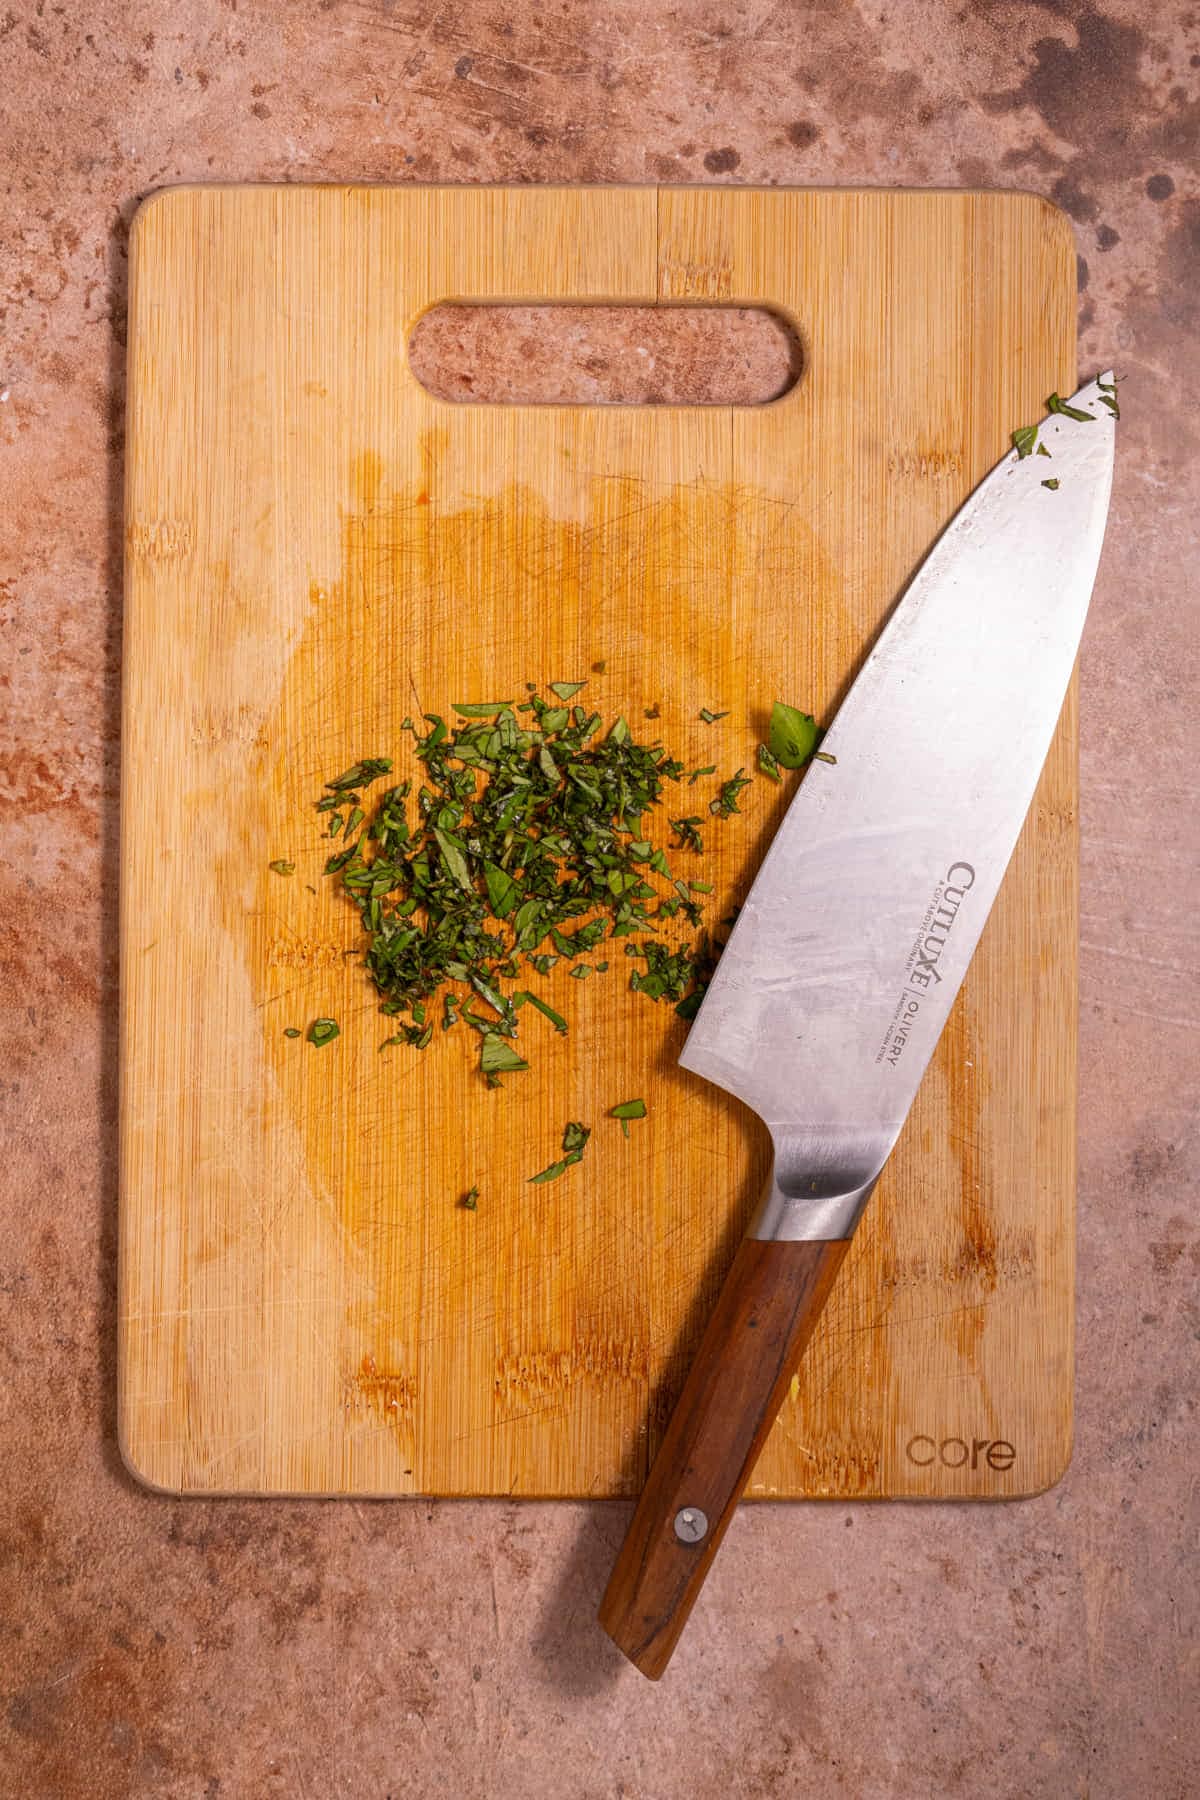 Diced fresh basil leaves on a chopping board